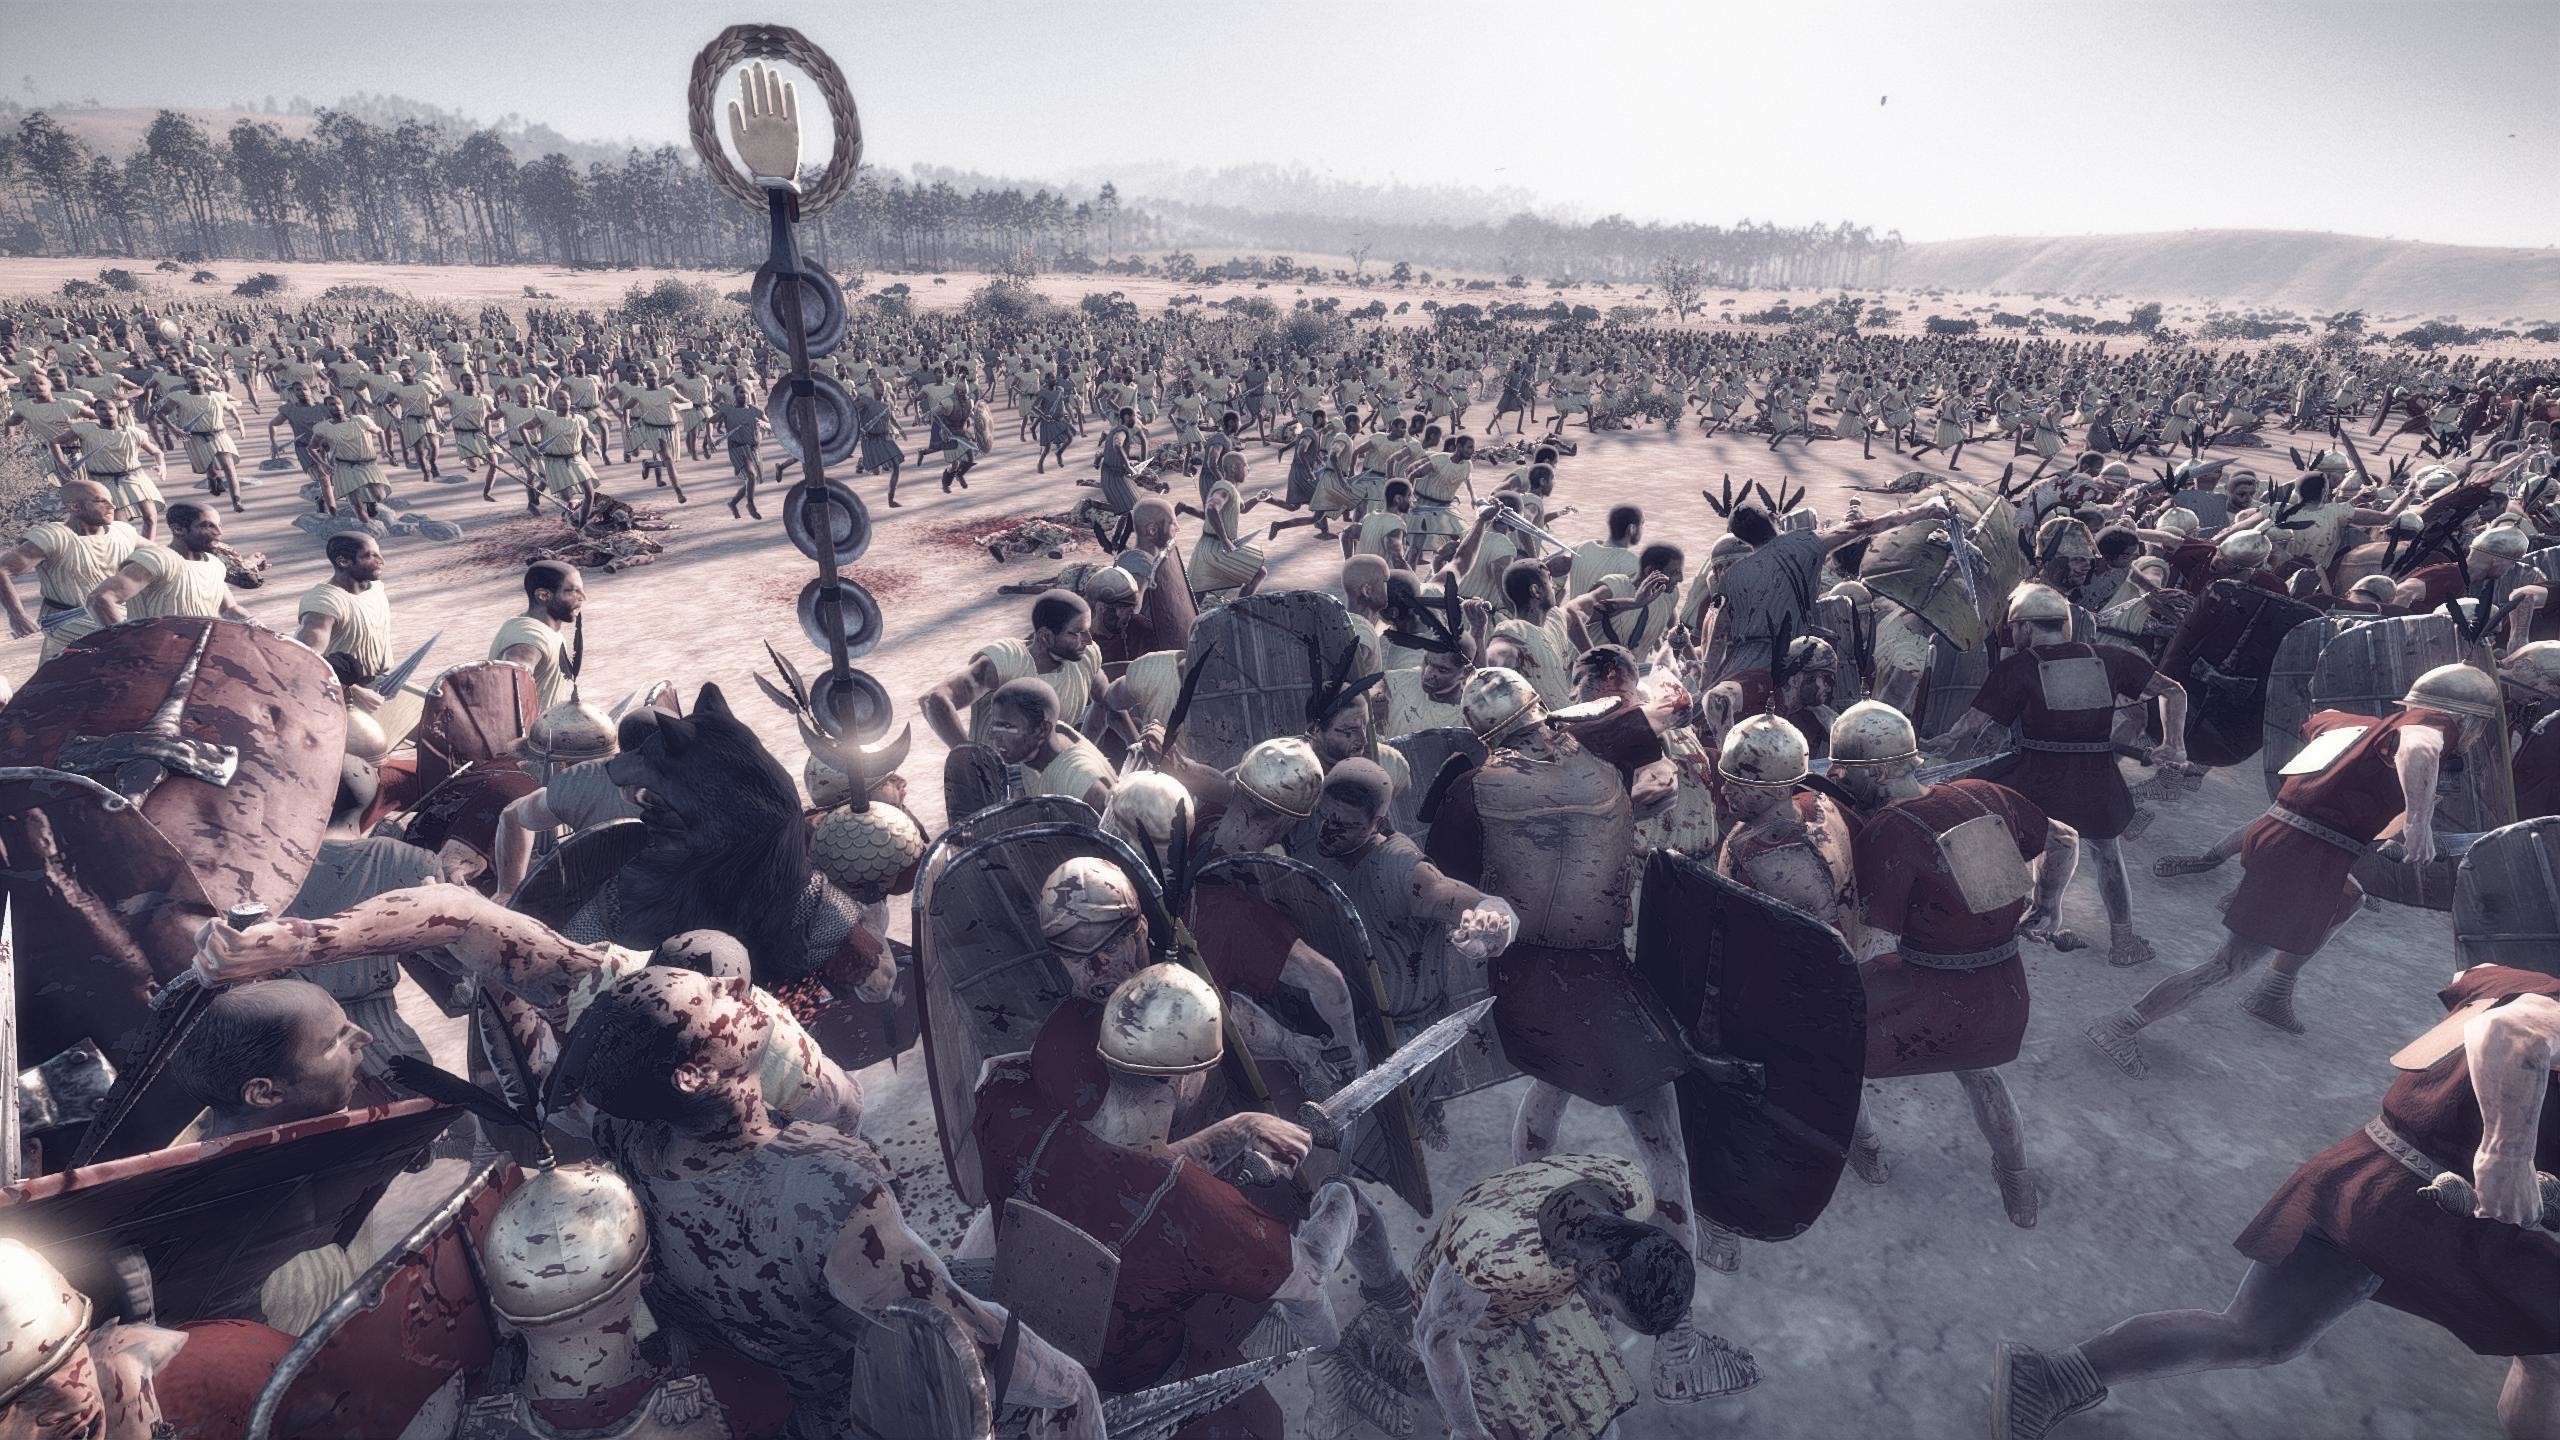 ローマ軍団の壁紙,群集,人,出来事,写真撮影,反乱